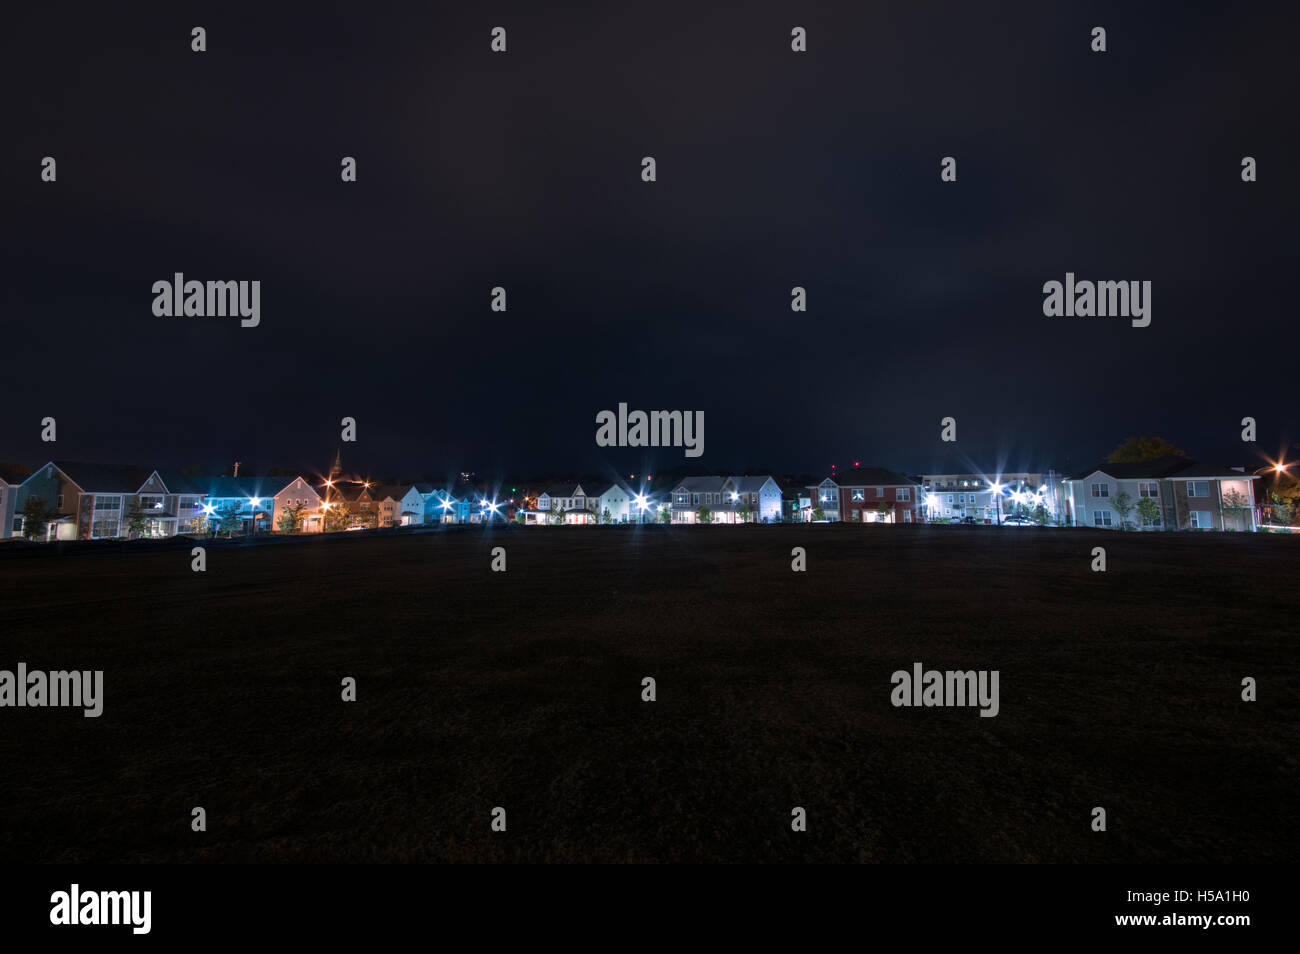 Night photograph of an urban housing development Stock Photo